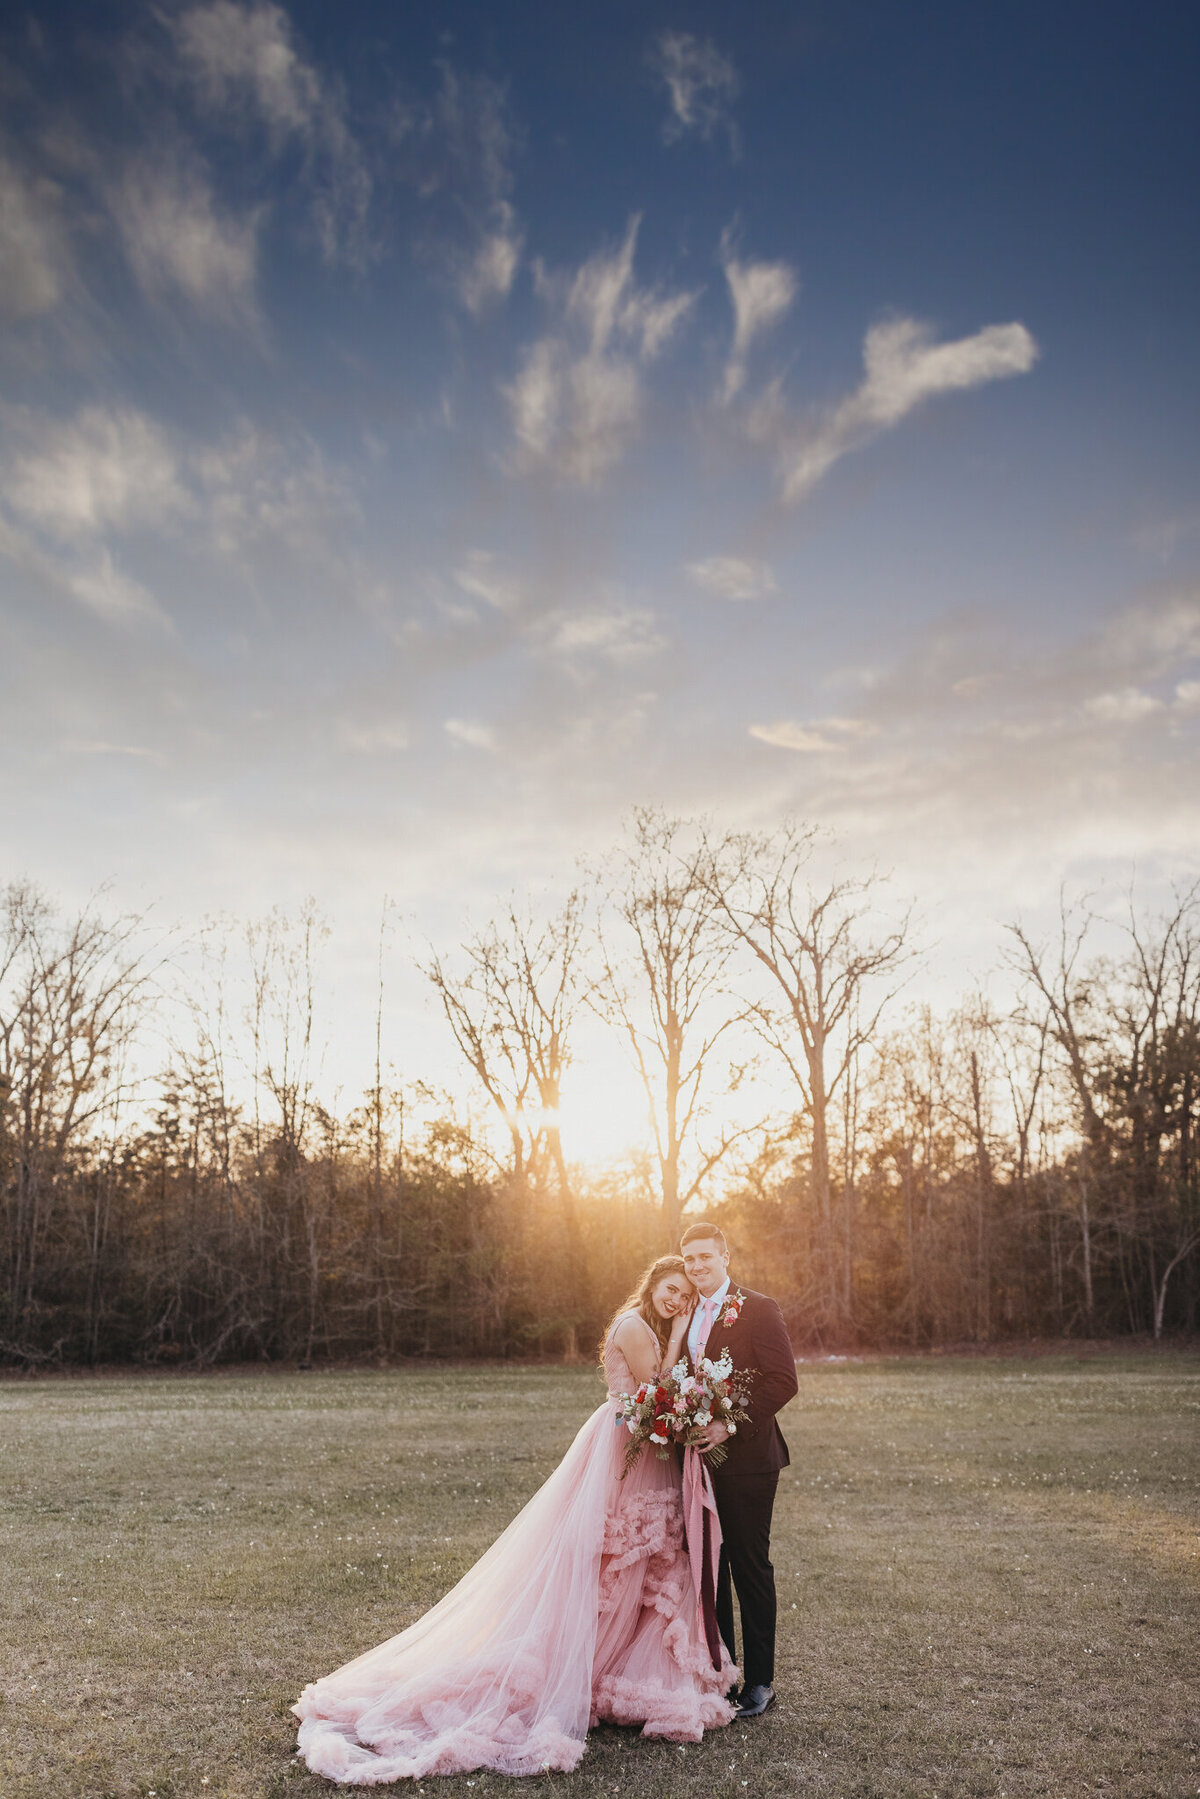 Farrah Nichole Photography - Texas Wedding Photographer38